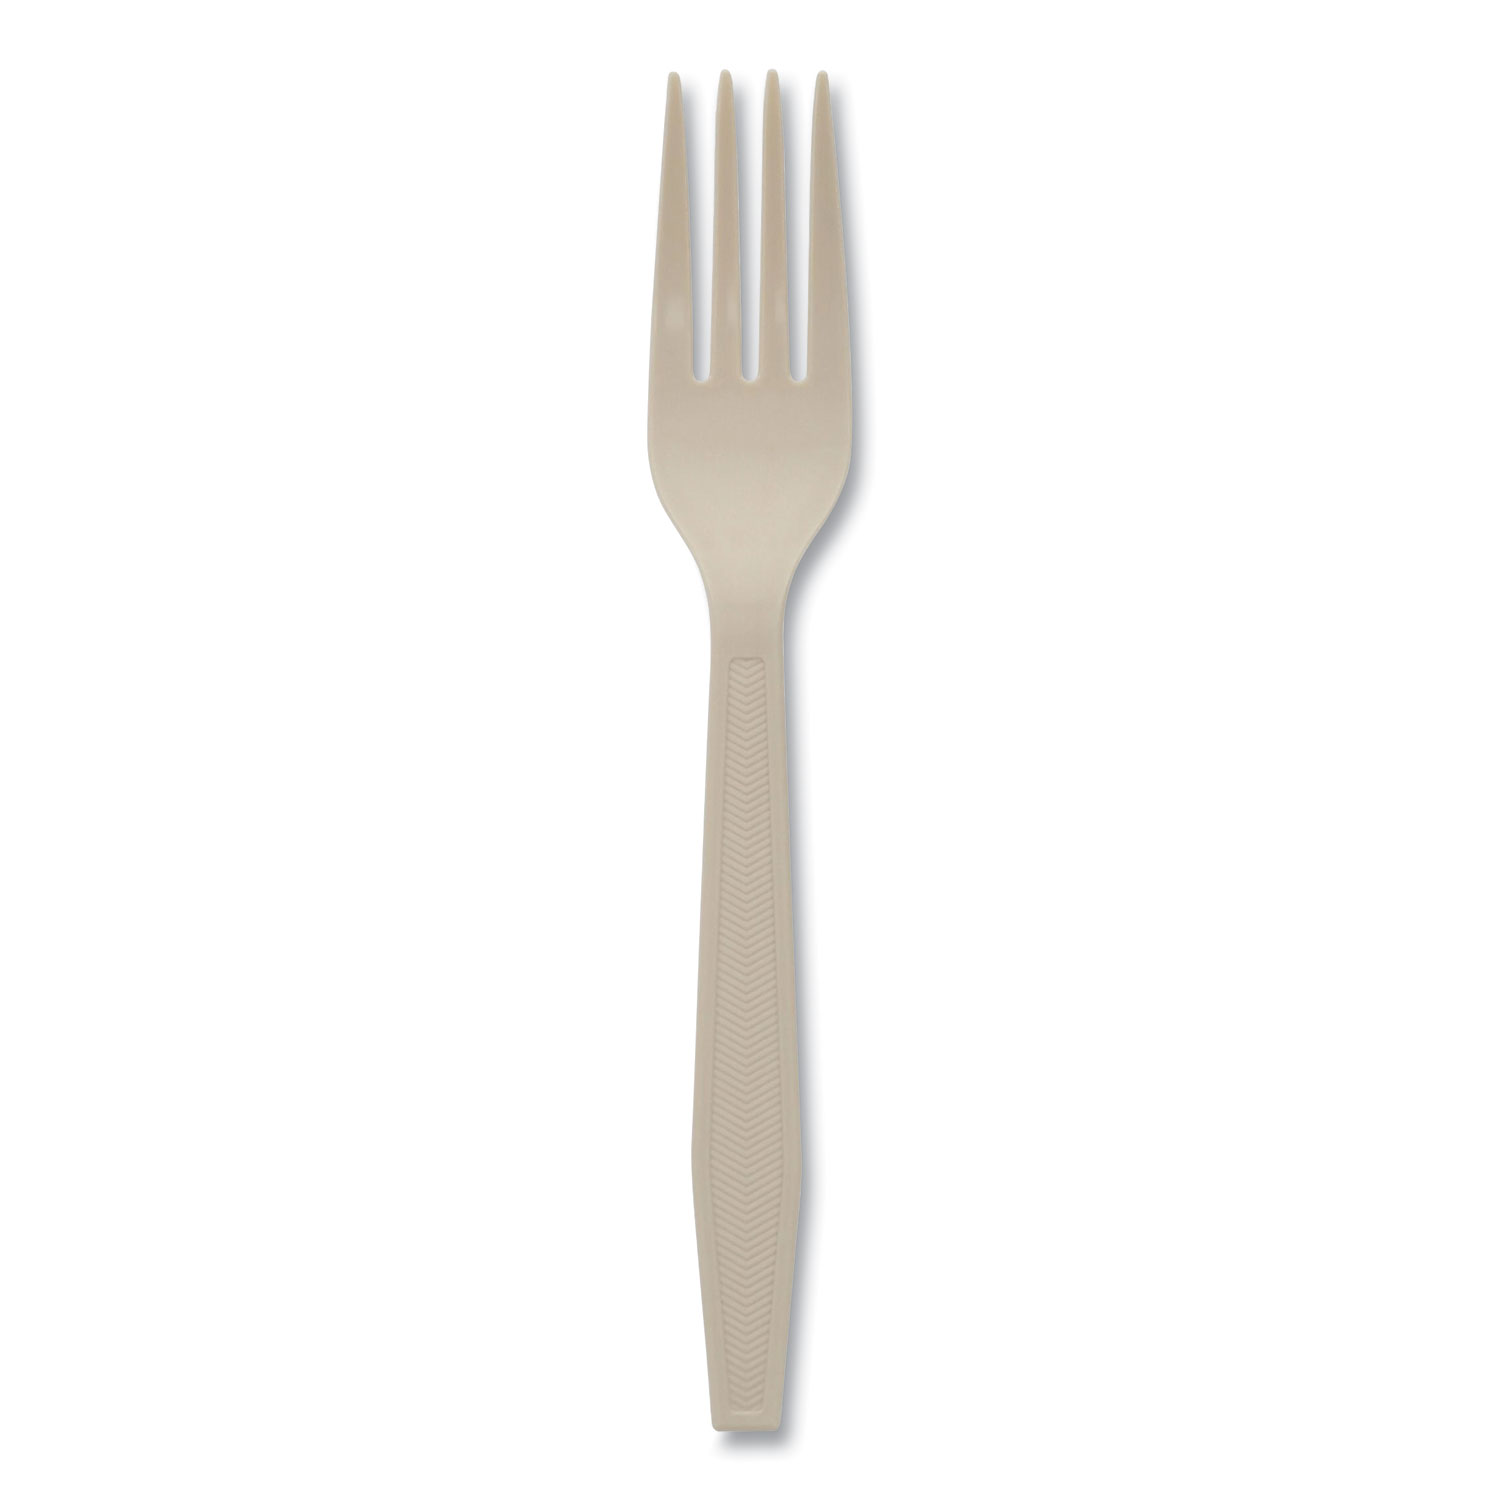 Pactiv EarthChoice PSM Cutlery, Heavyweight, Fork, 6.88, Tan, 1,000/Carton